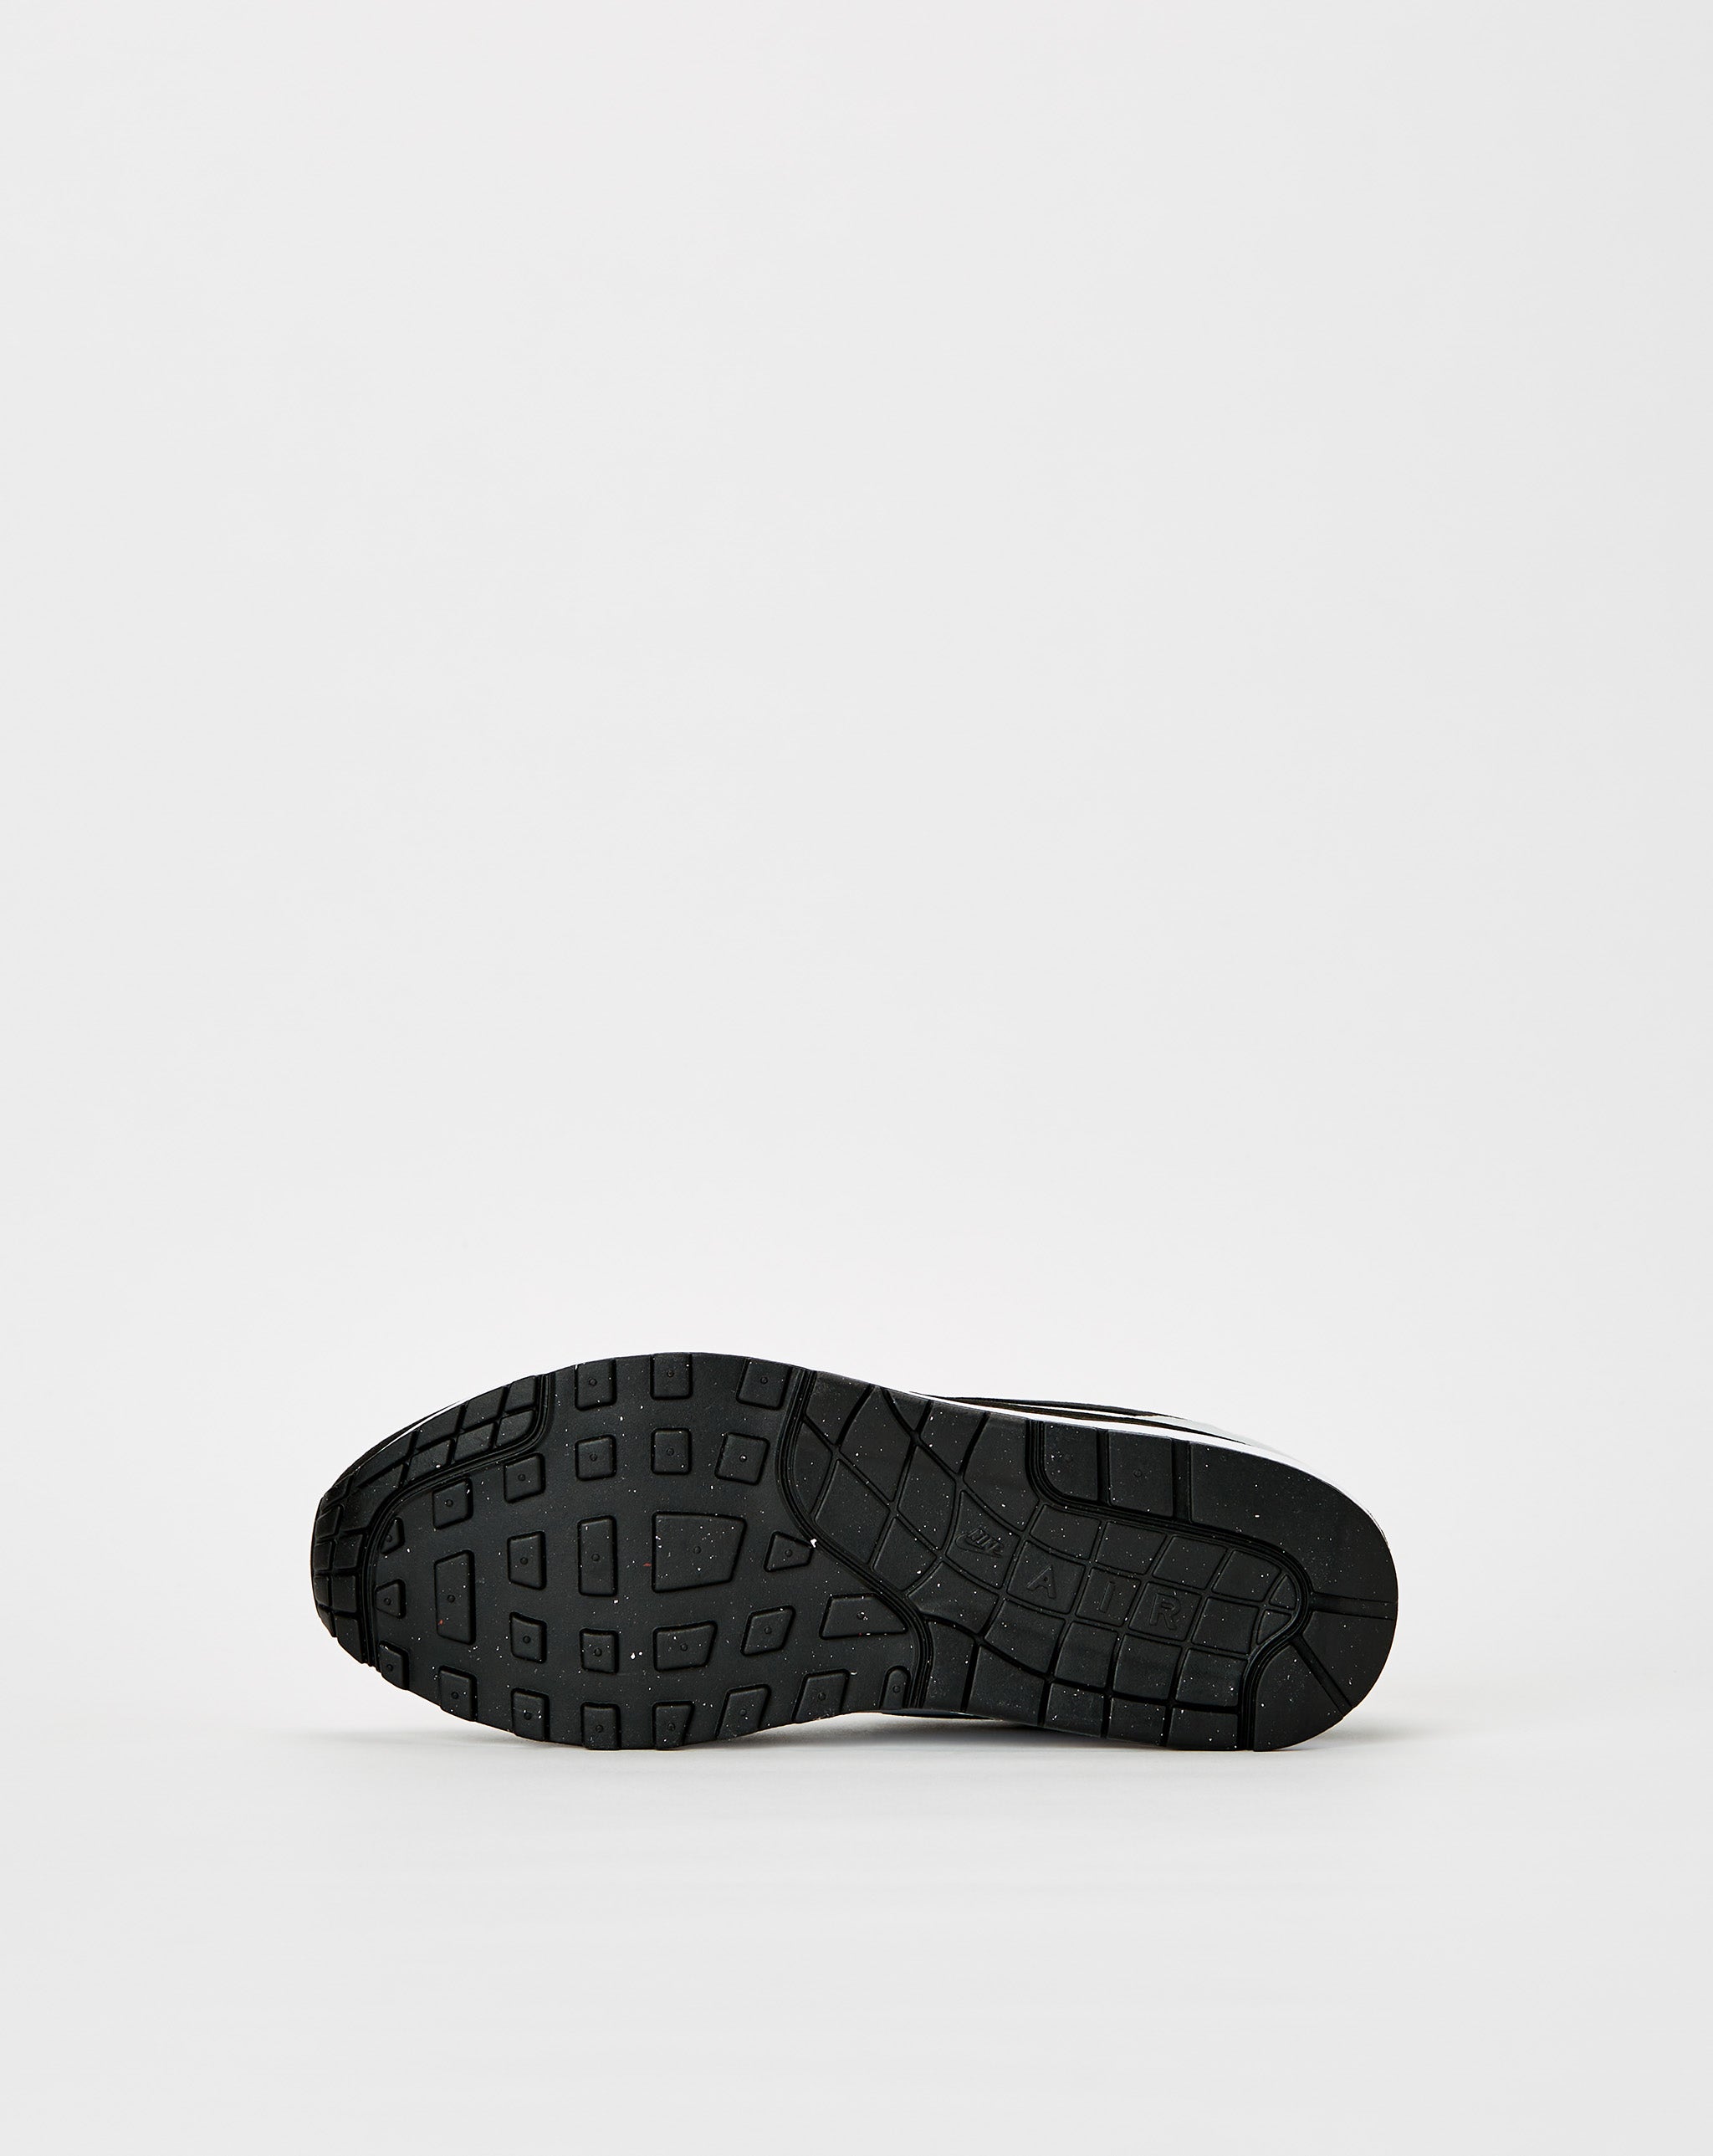 Nike Ankle boots RIEKER Z8142-01 Schwarz  - Cheap Erlebniswelt-fliegenfischen Jordan outlet